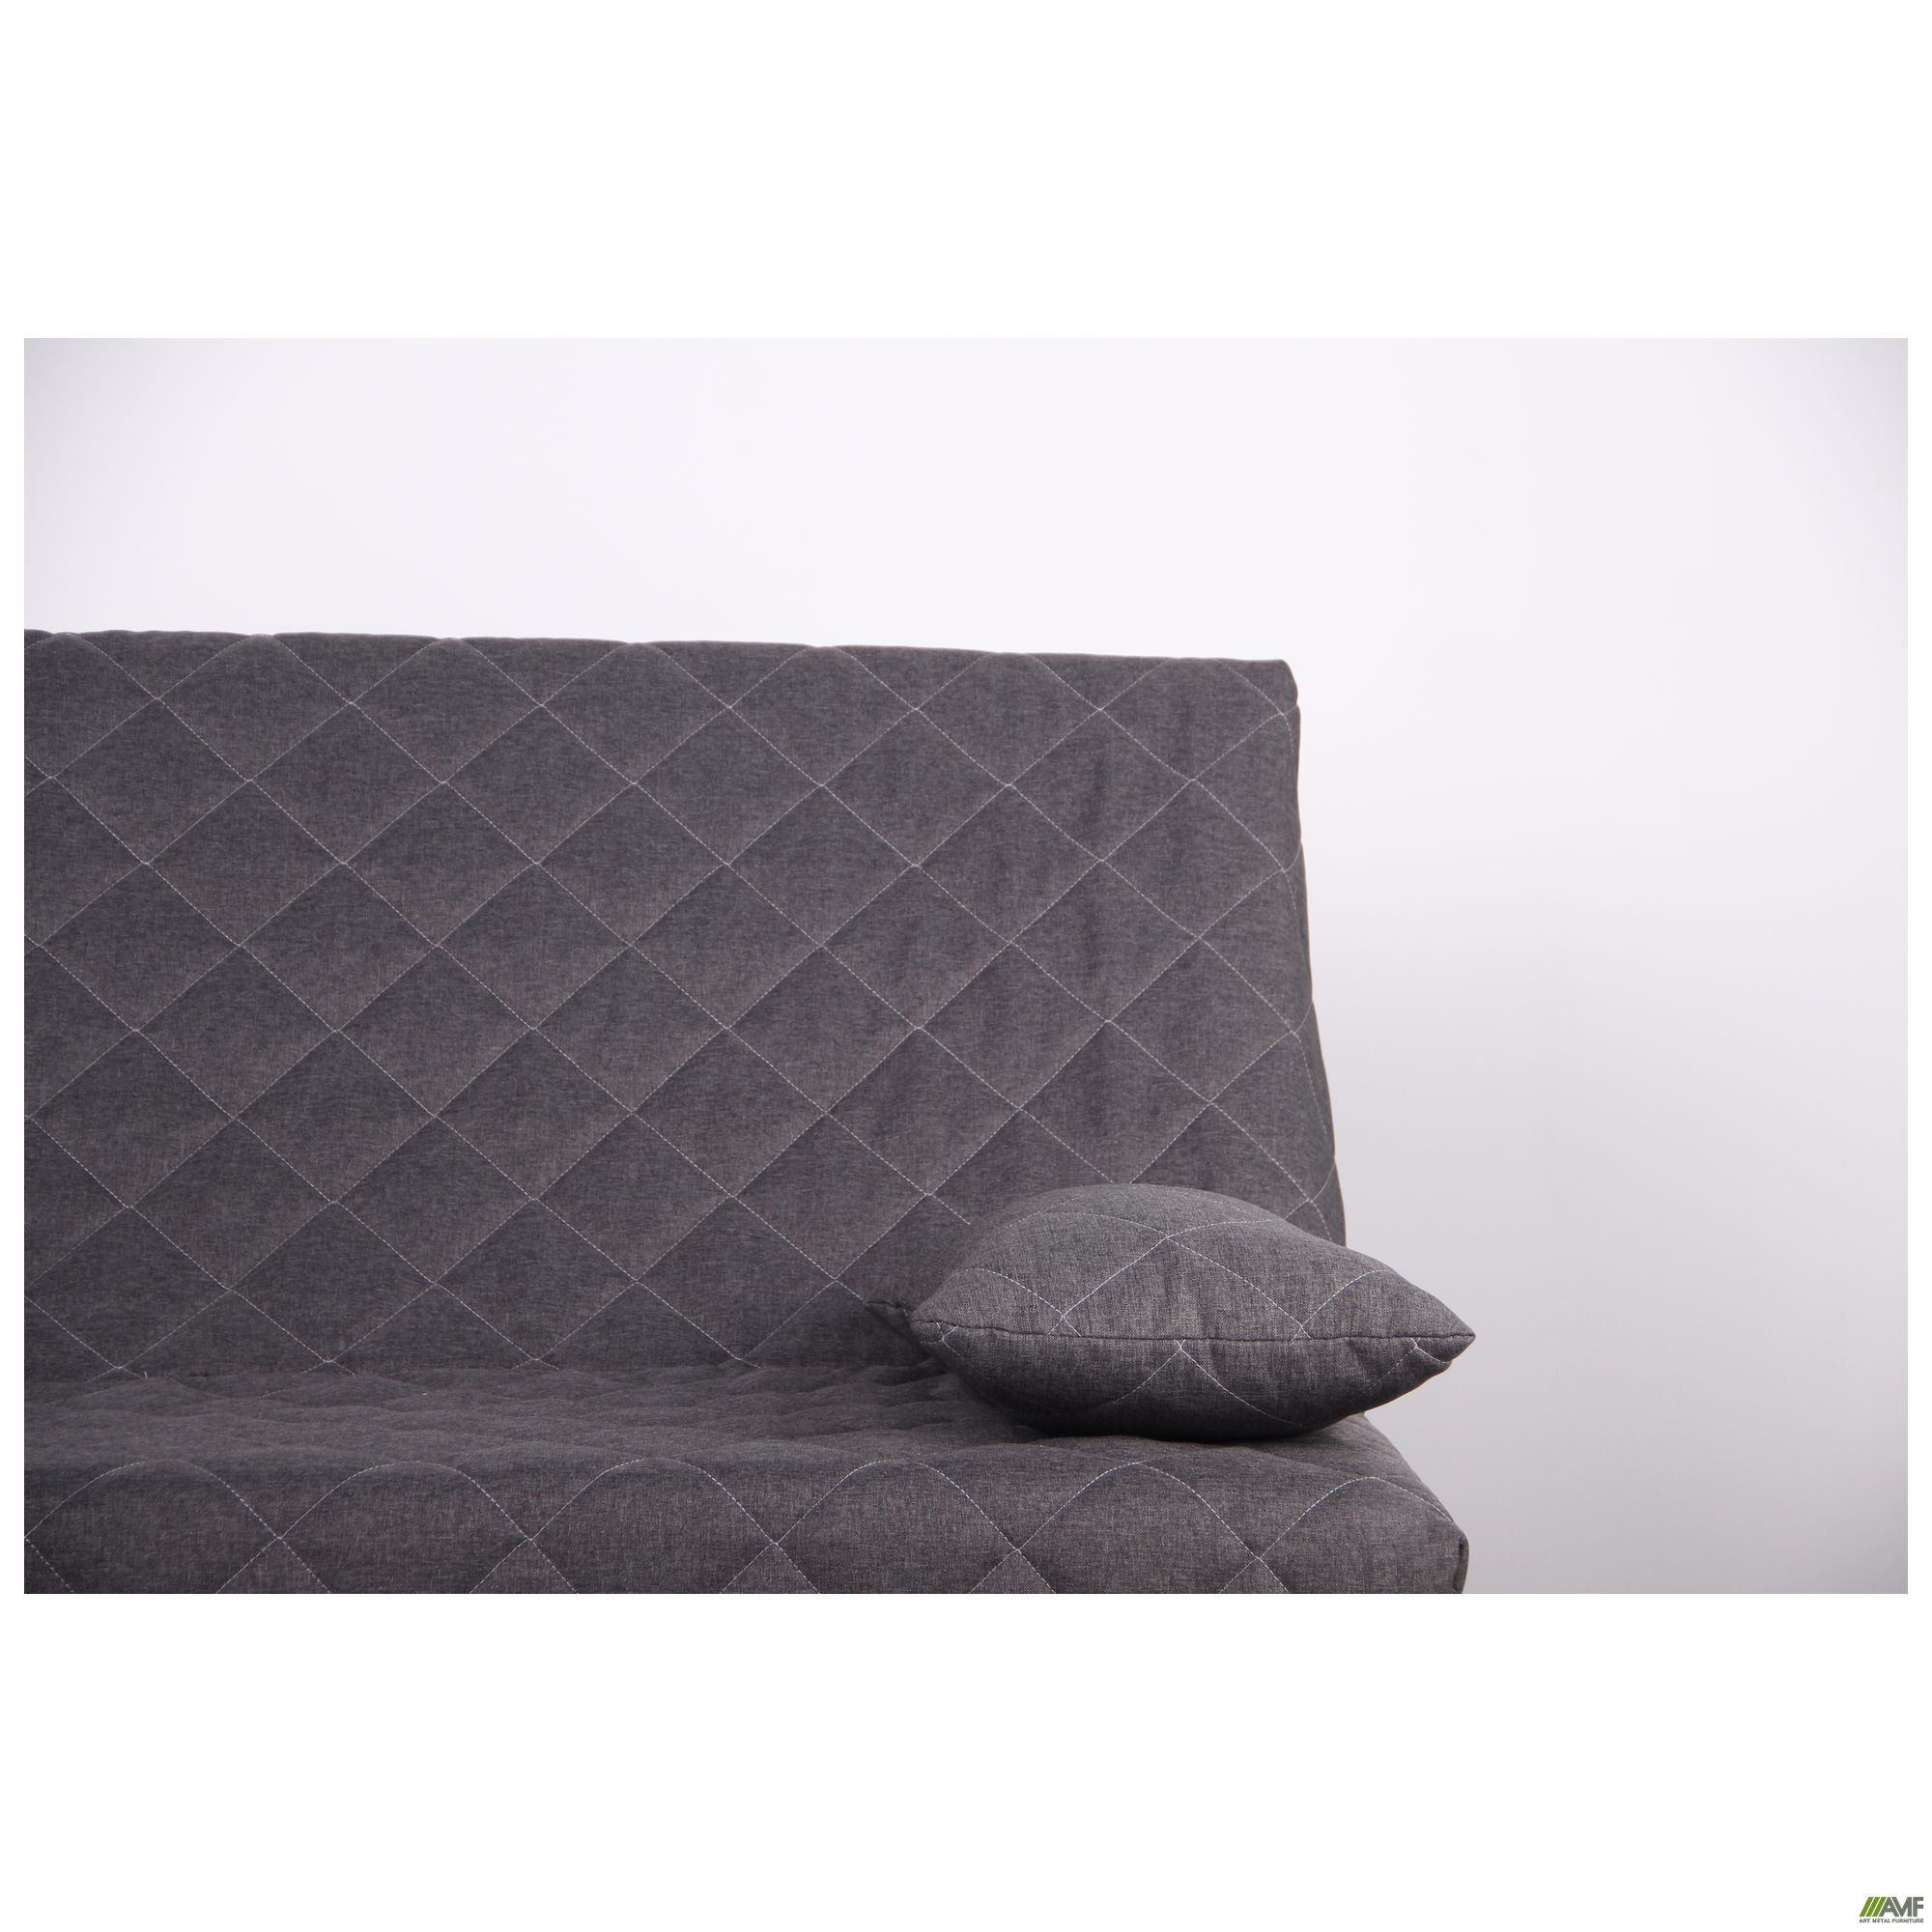 Фото 9 - Диван Ньюс механизм клик-кляк Саванна Нова 14 DK. Grey с двумя подушками со штрихкодом EAN 